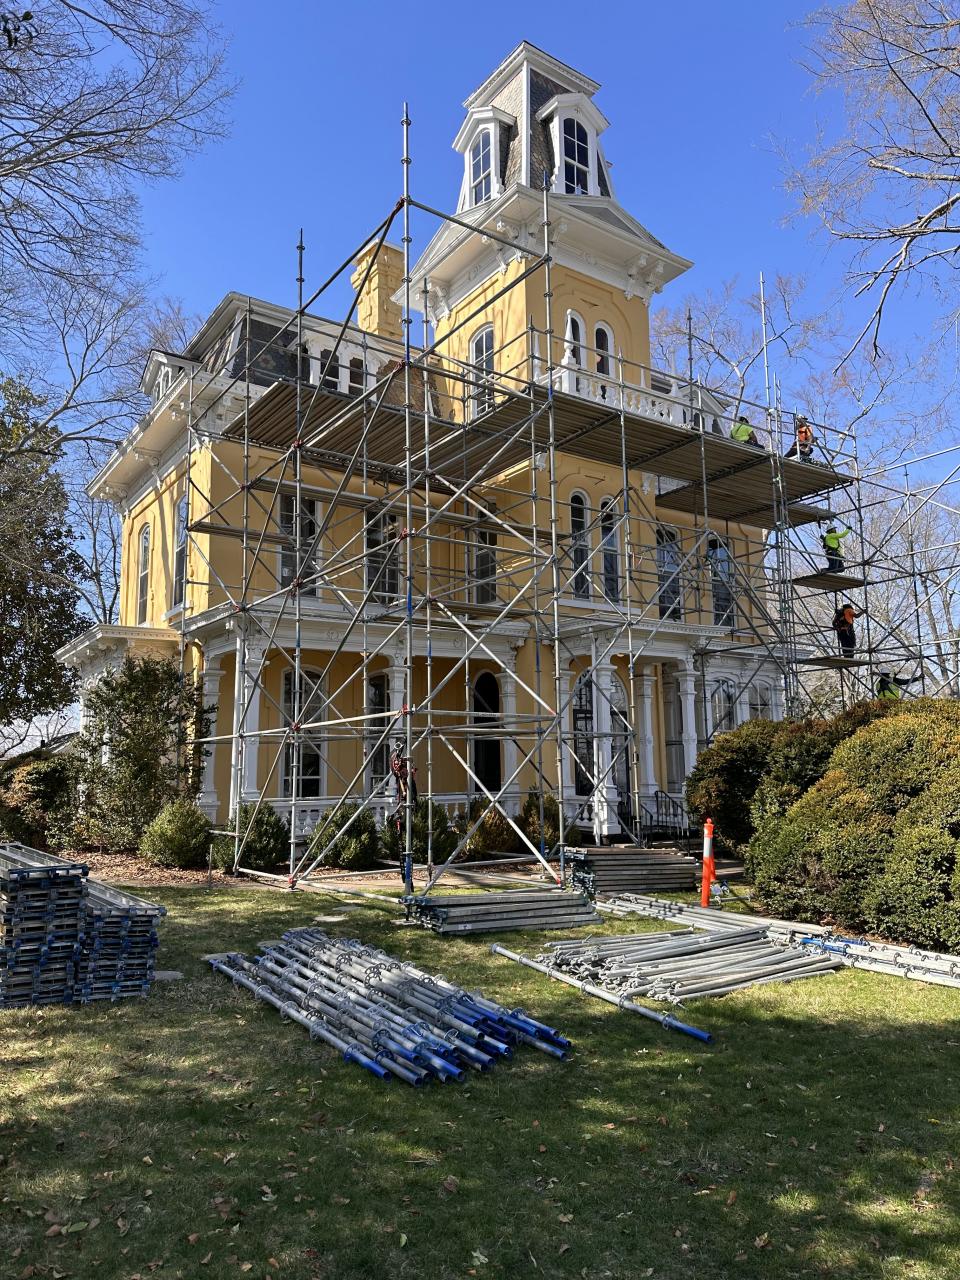 Banker's House undergoes renovations